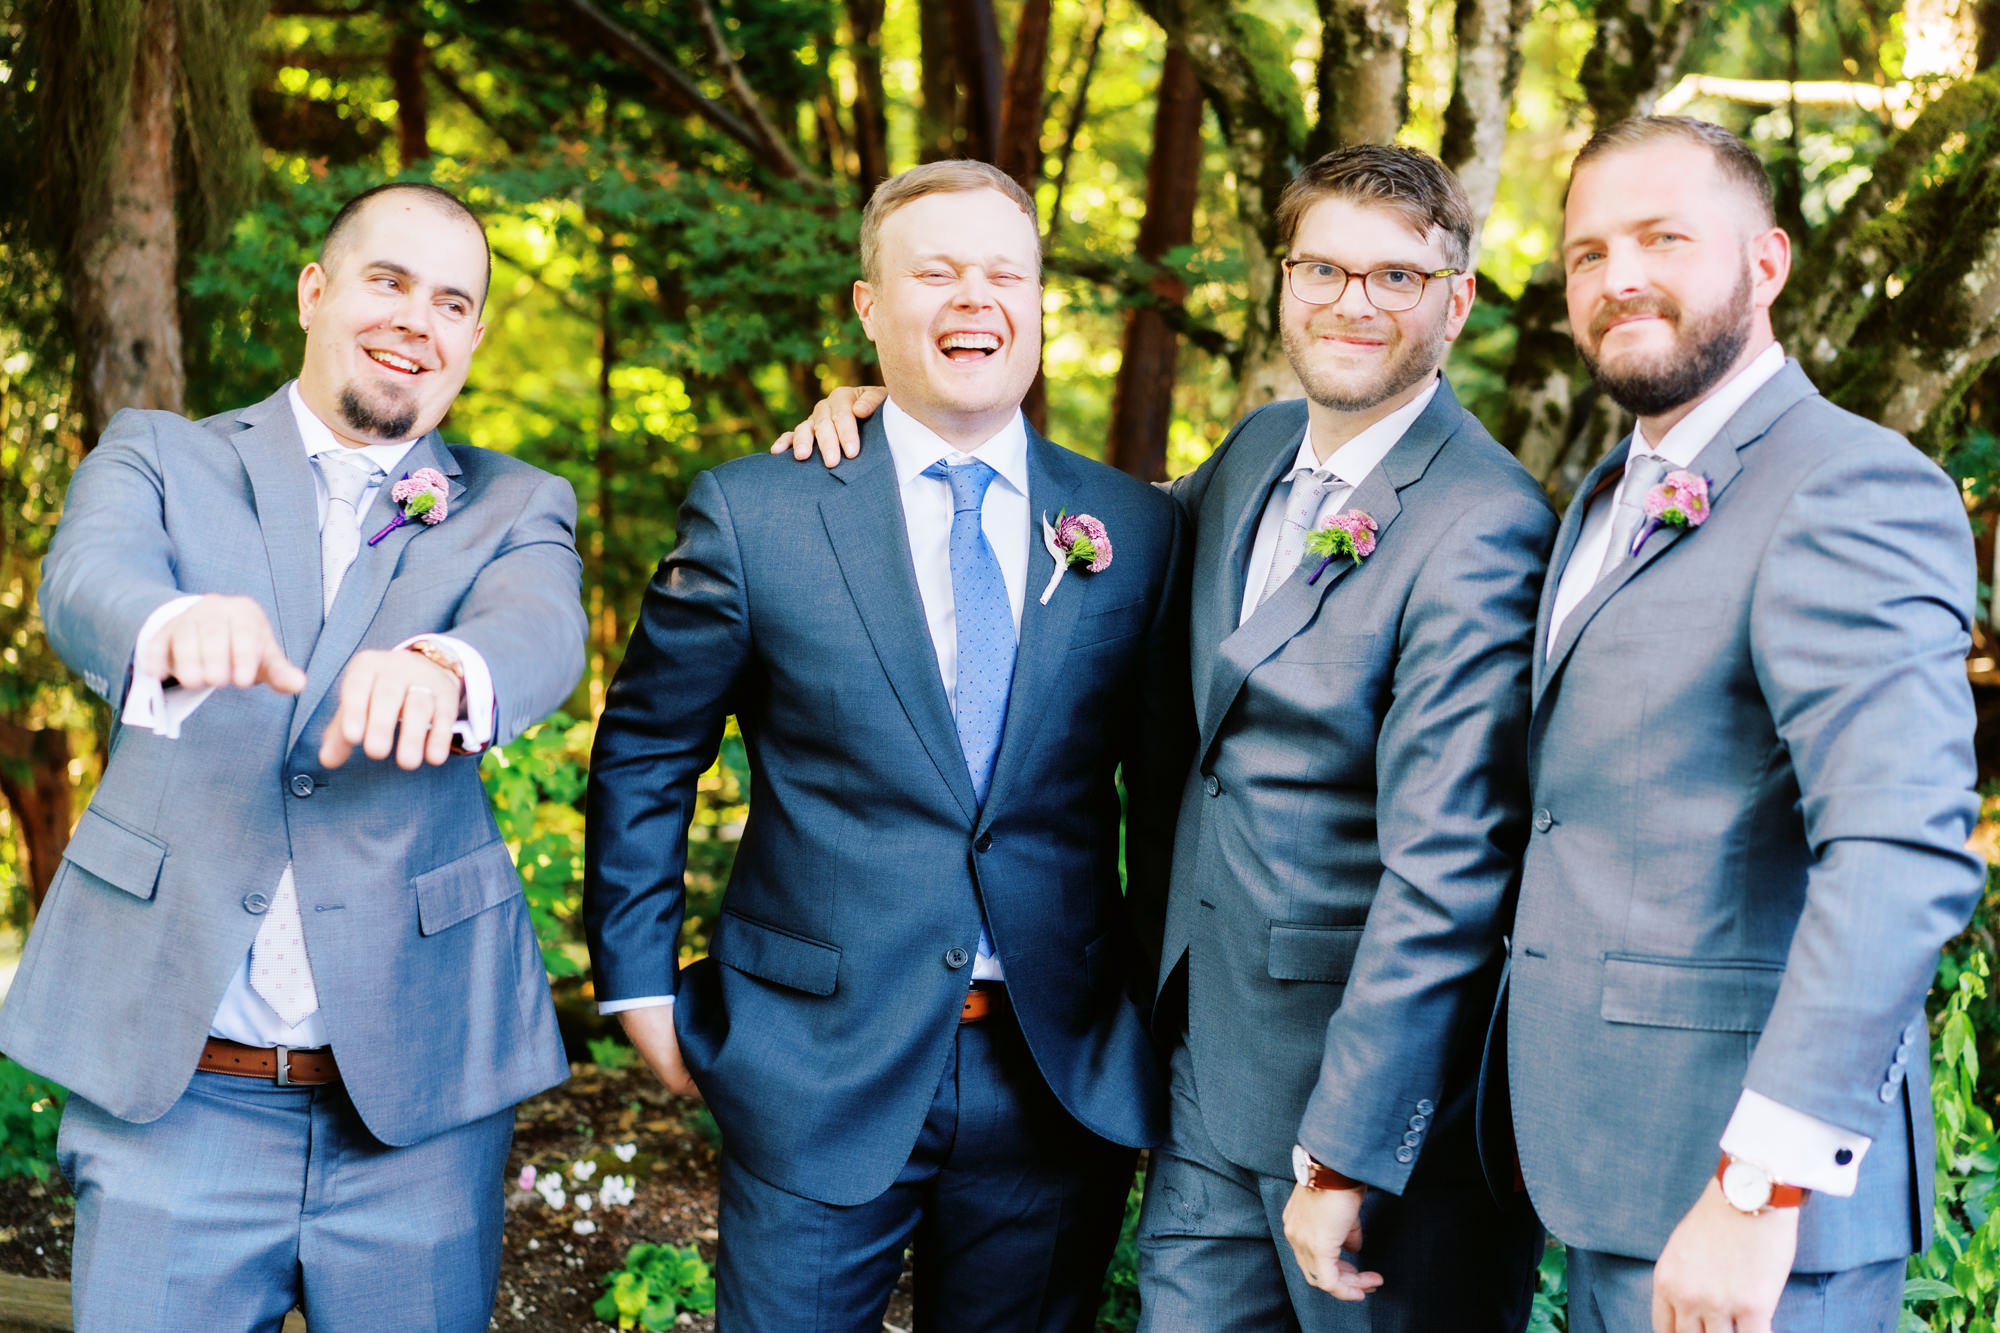 Seattle wedding photographer Jenn Tai: Brian Clevenger with his groomsmen